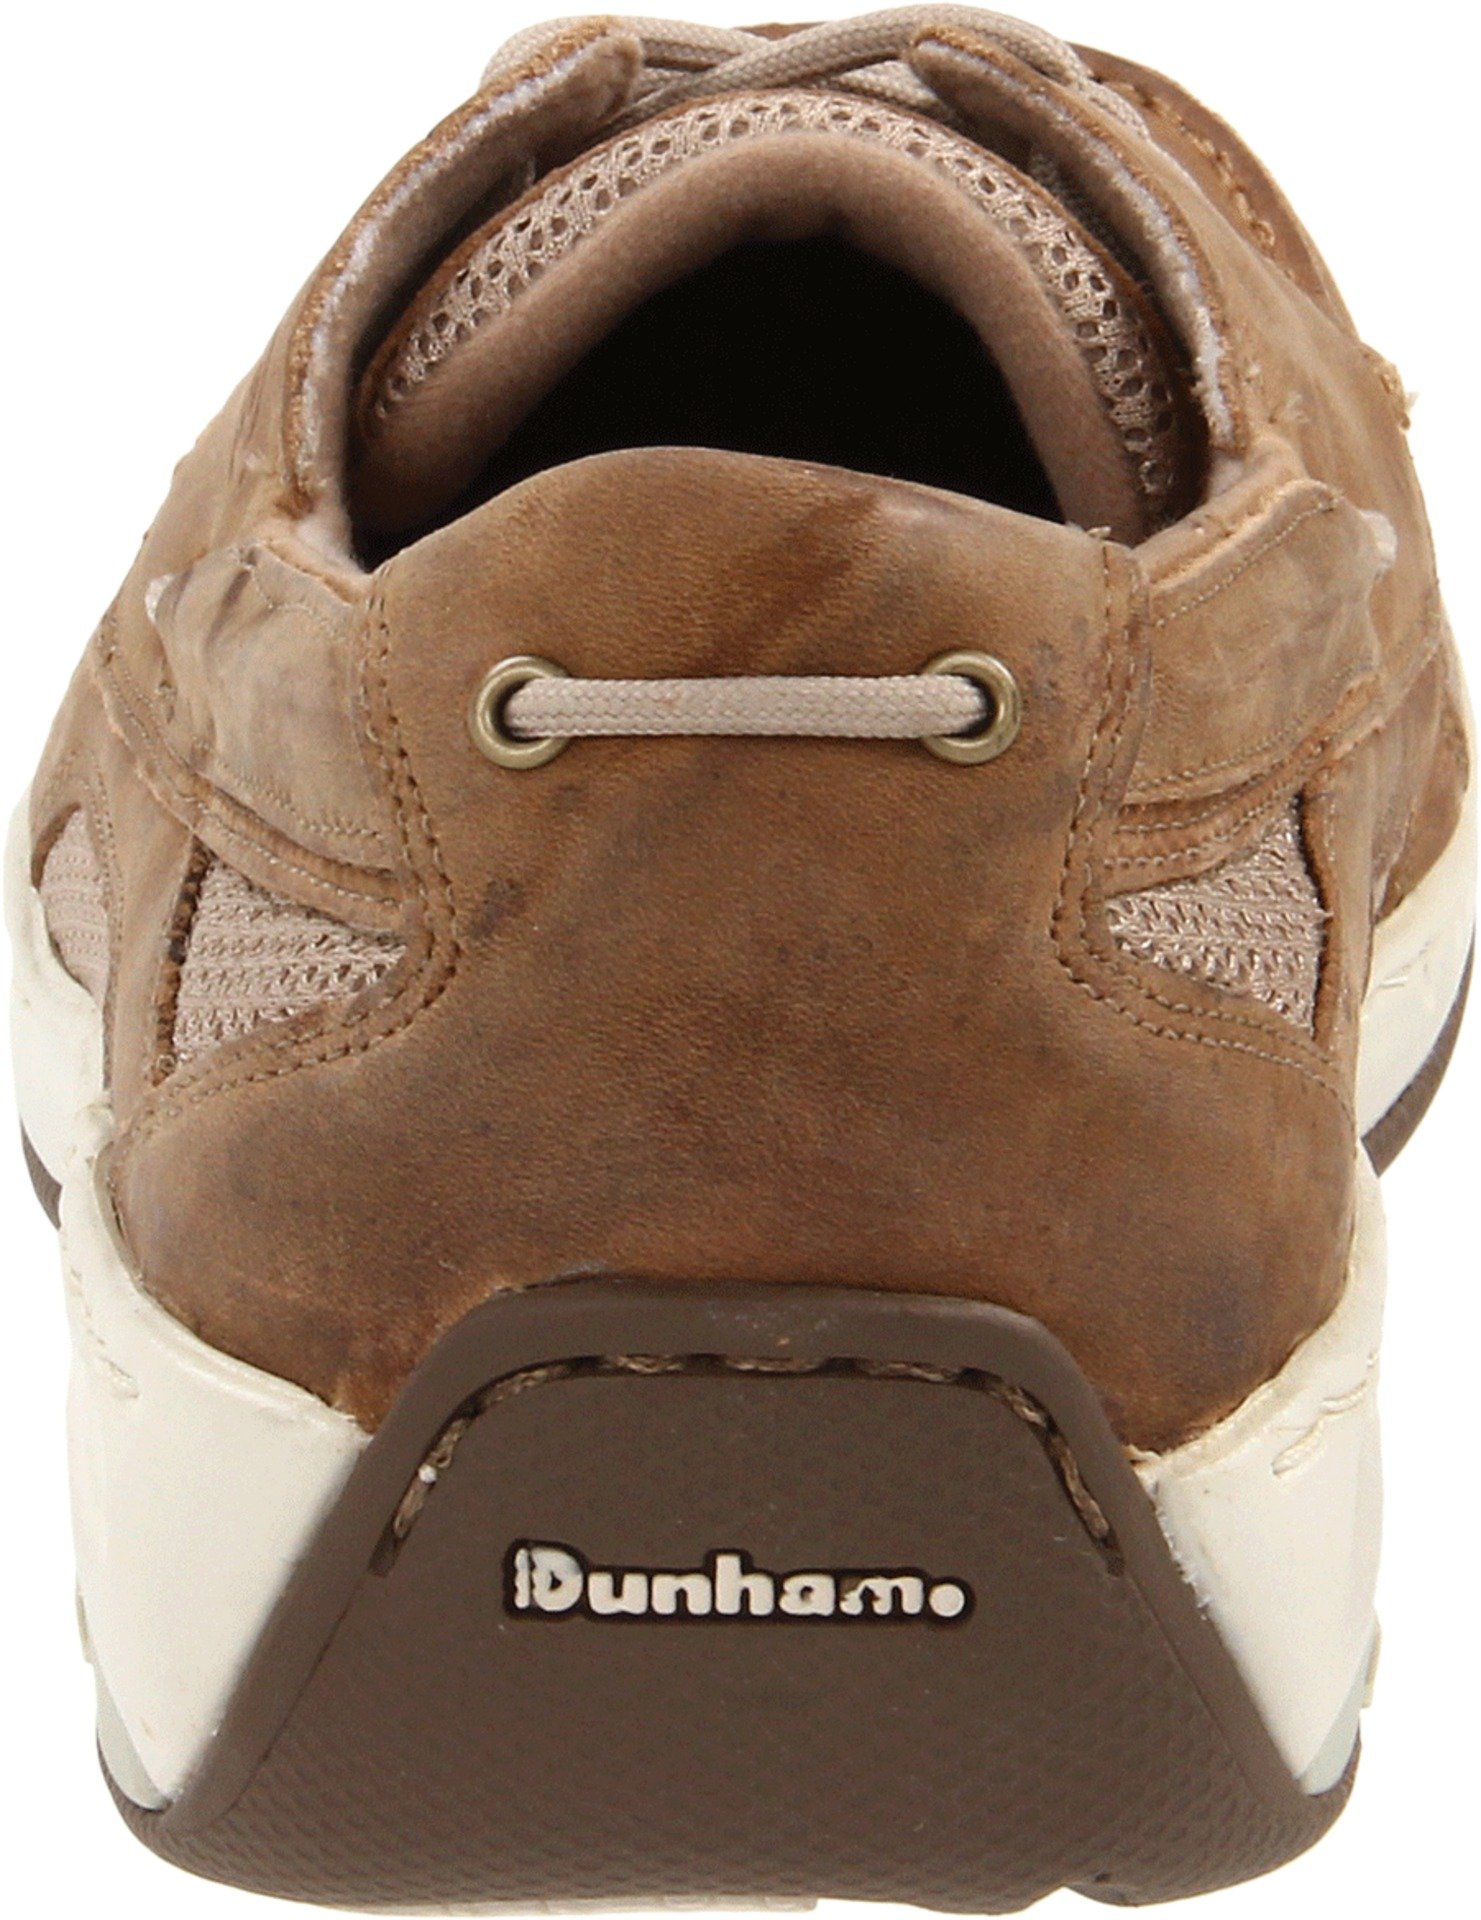 Dunham Men's Captain Boat Shoe,Tan,12 6E US